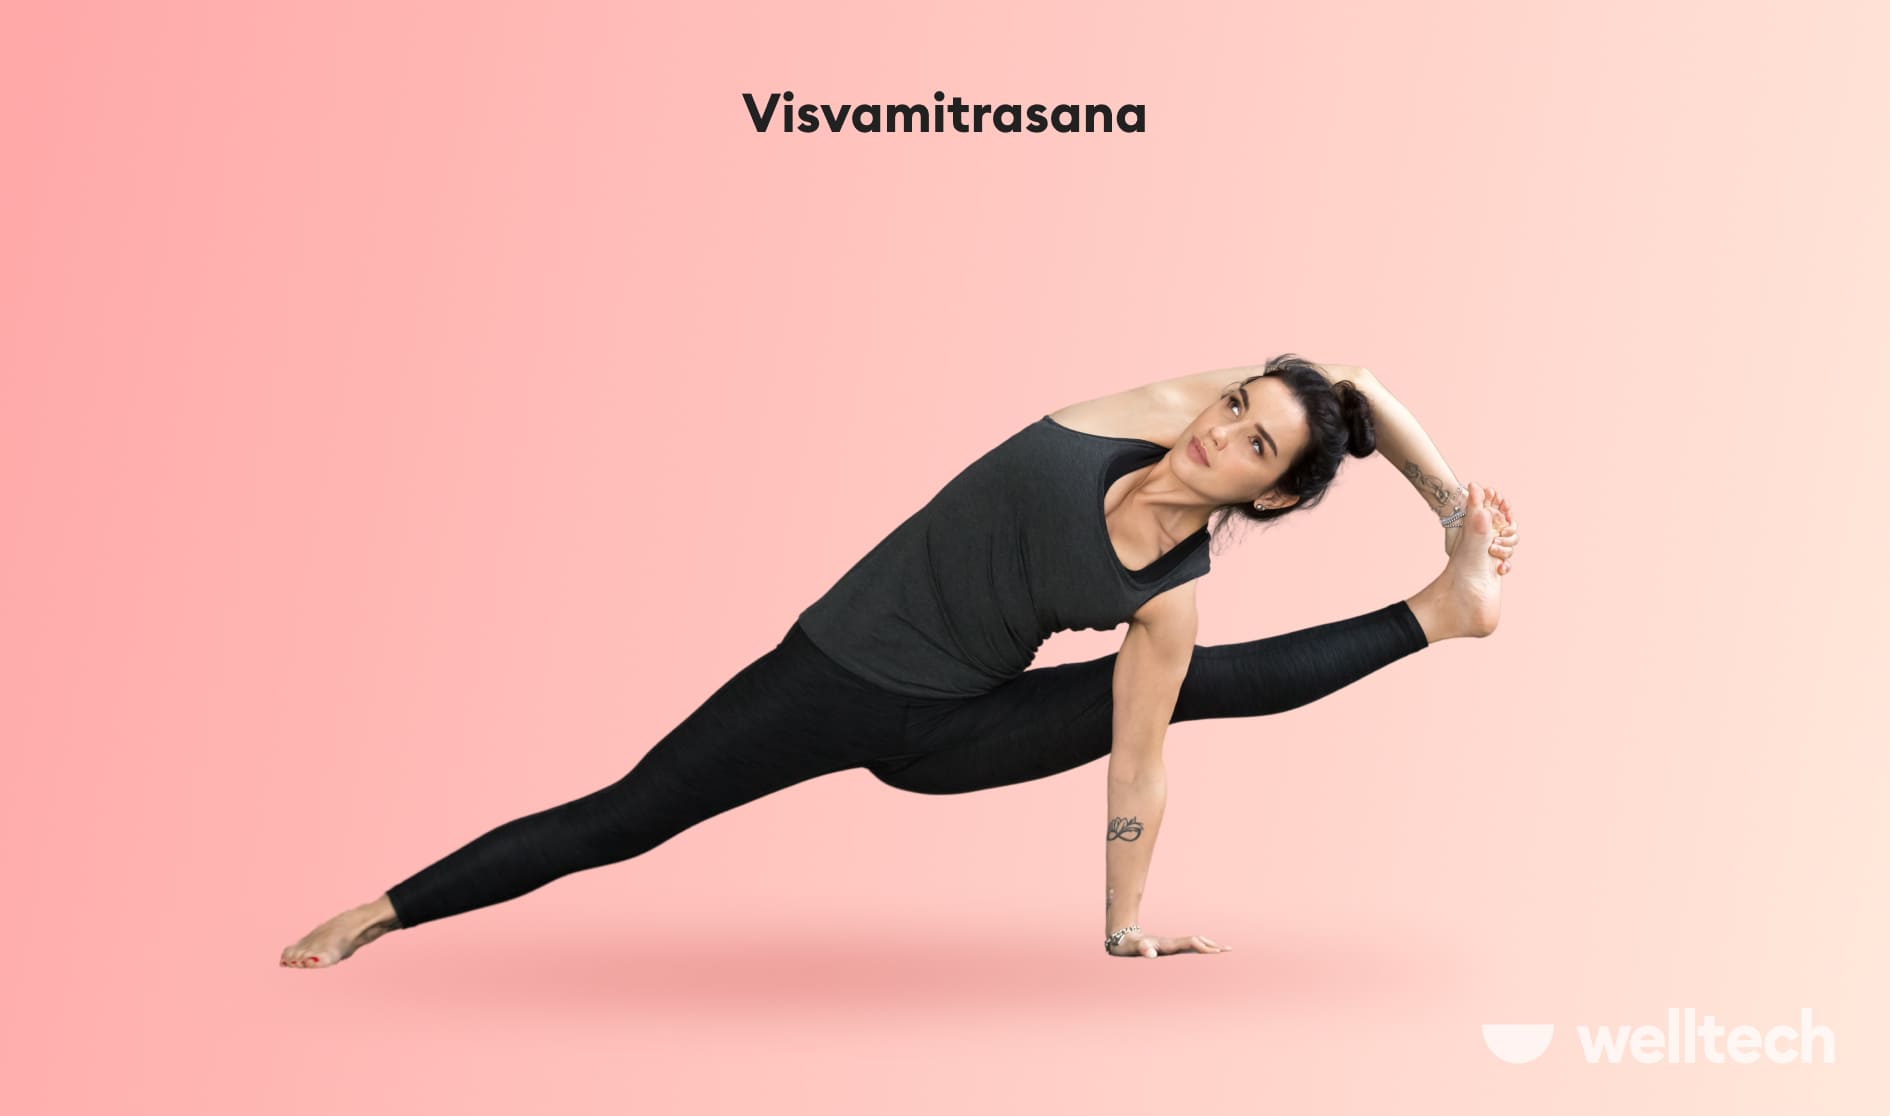 a woman is practicing Visvamitrasana_crazy yoga poses